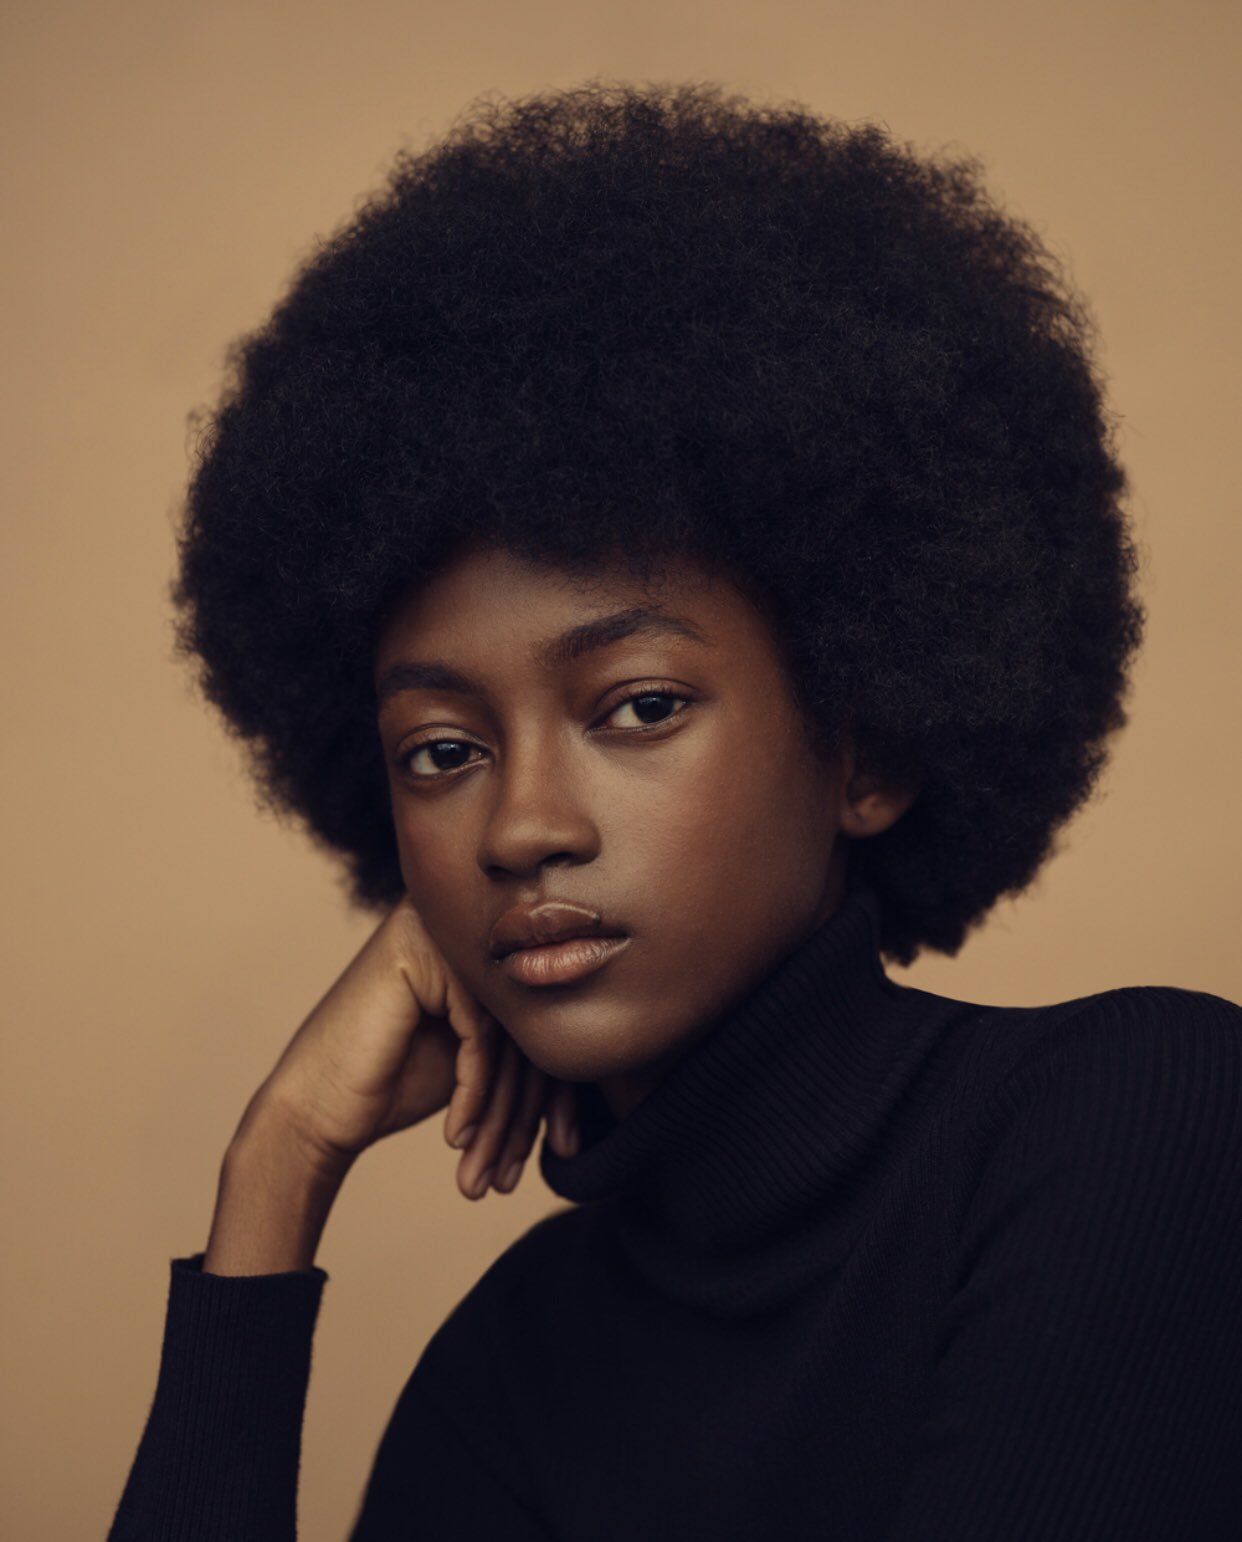 13 black beauty Editorial ideas